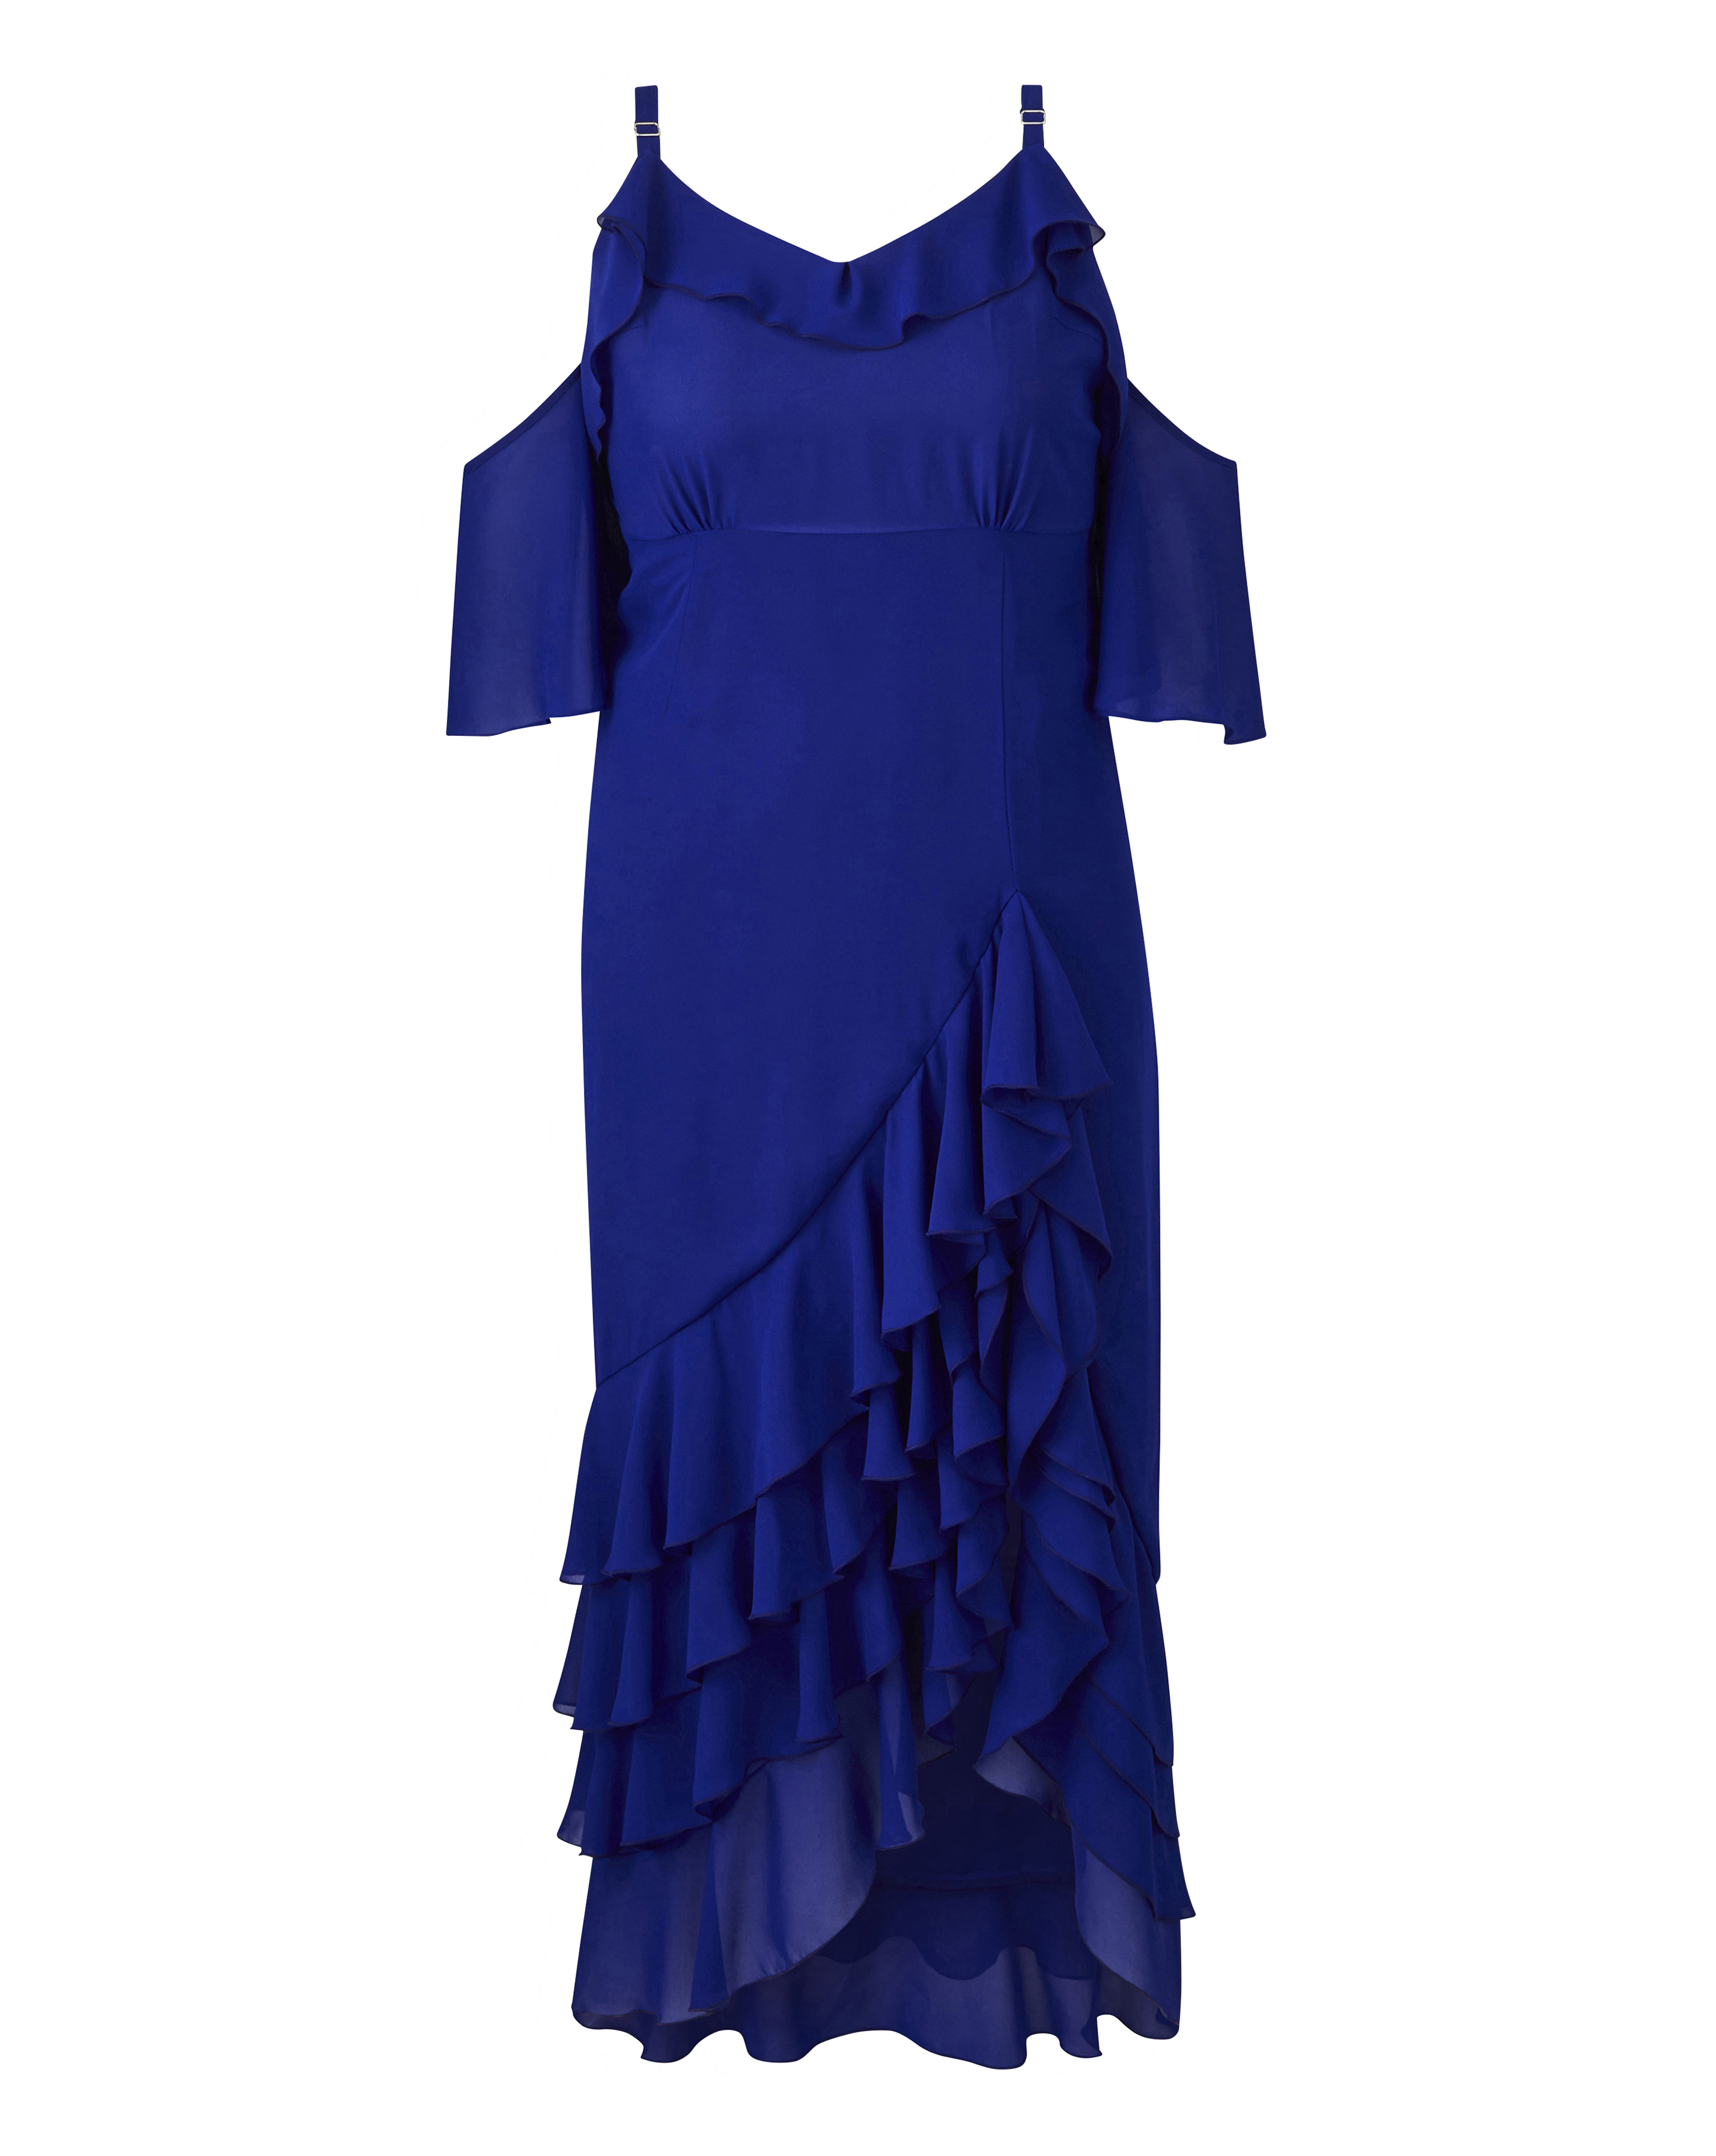 Blue Ruffled Prom Dress